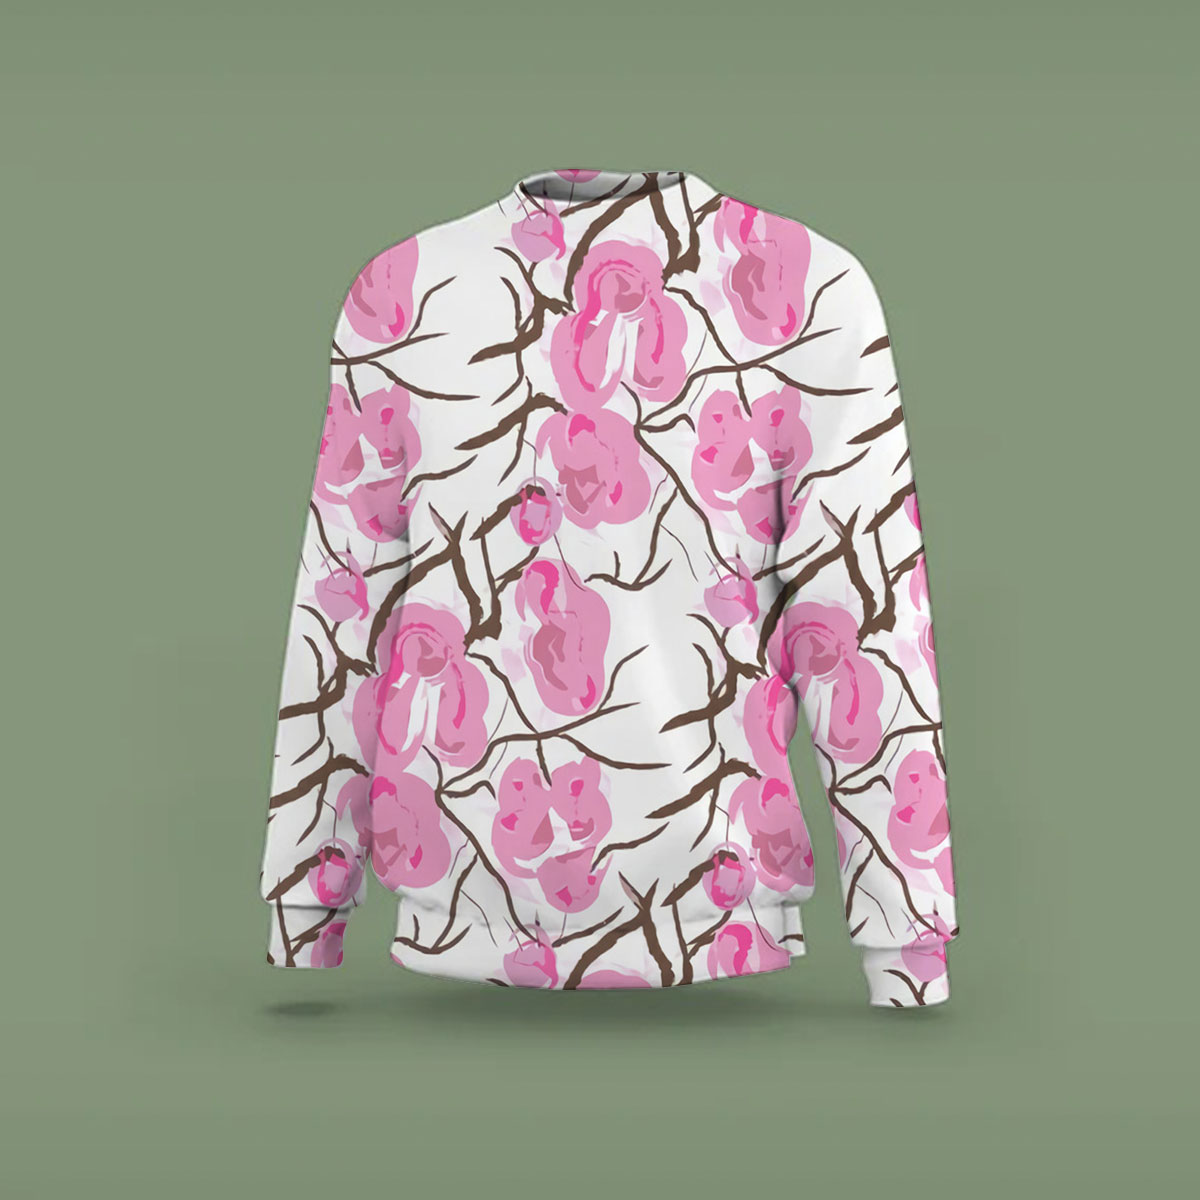 Abstract Cherry Blossom Sweatshirt